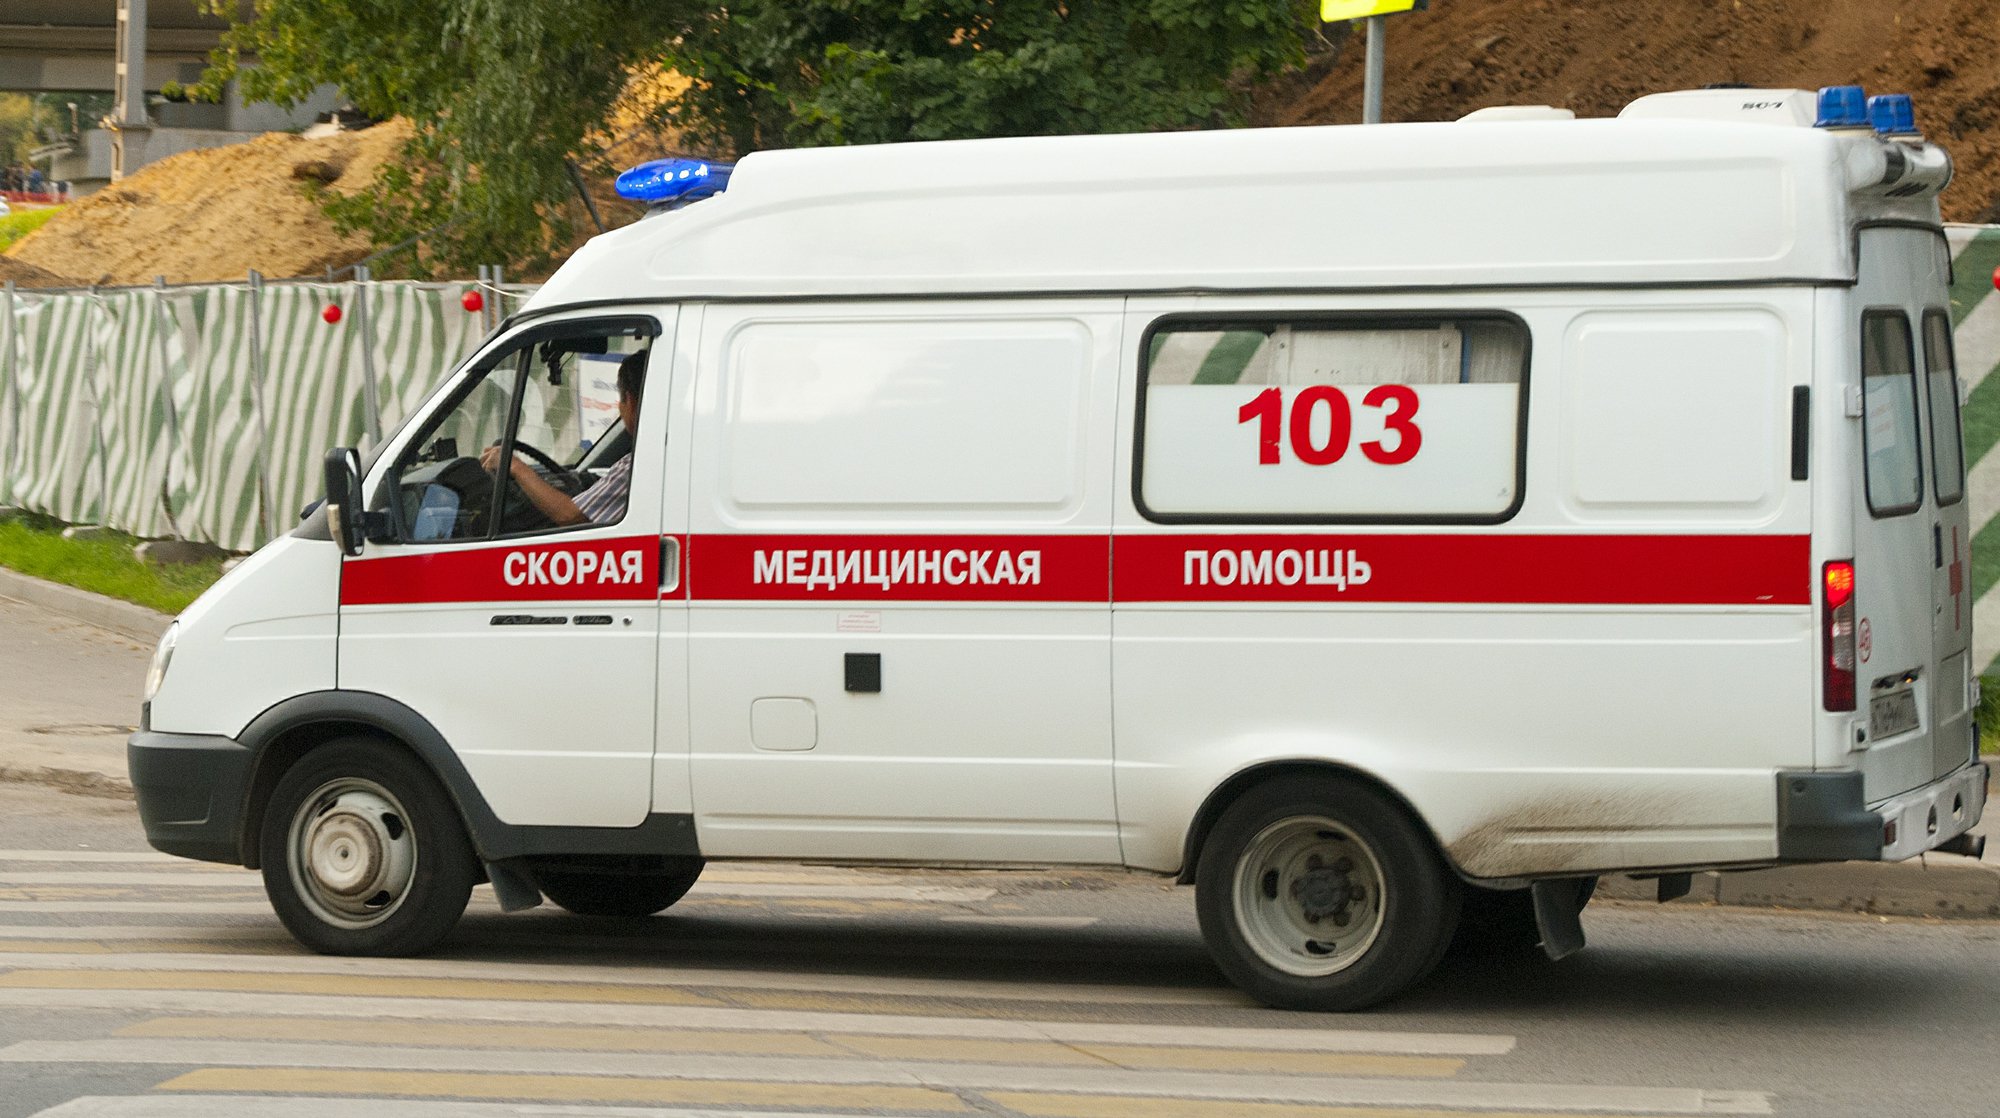 Dailystorm - В Москве мужчина сбежал от похитителей, выпрыгнув из окна